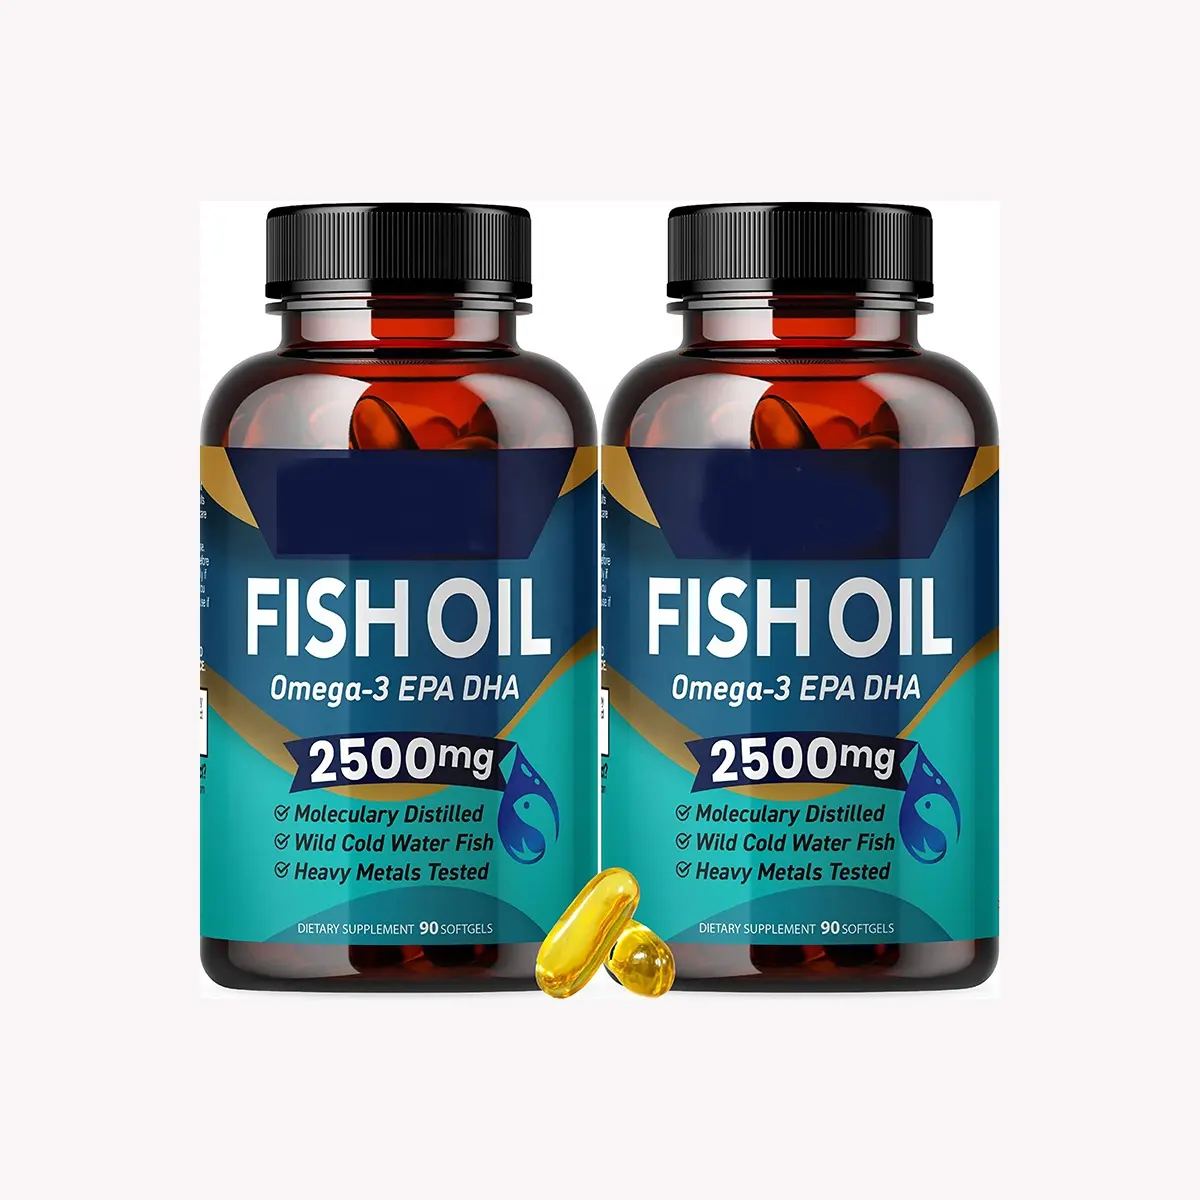 Private label Vegan Omega-3 Fish Oil capsules rich in DHA & EPA Fatty Acids for Heart, Brain & Immune Support